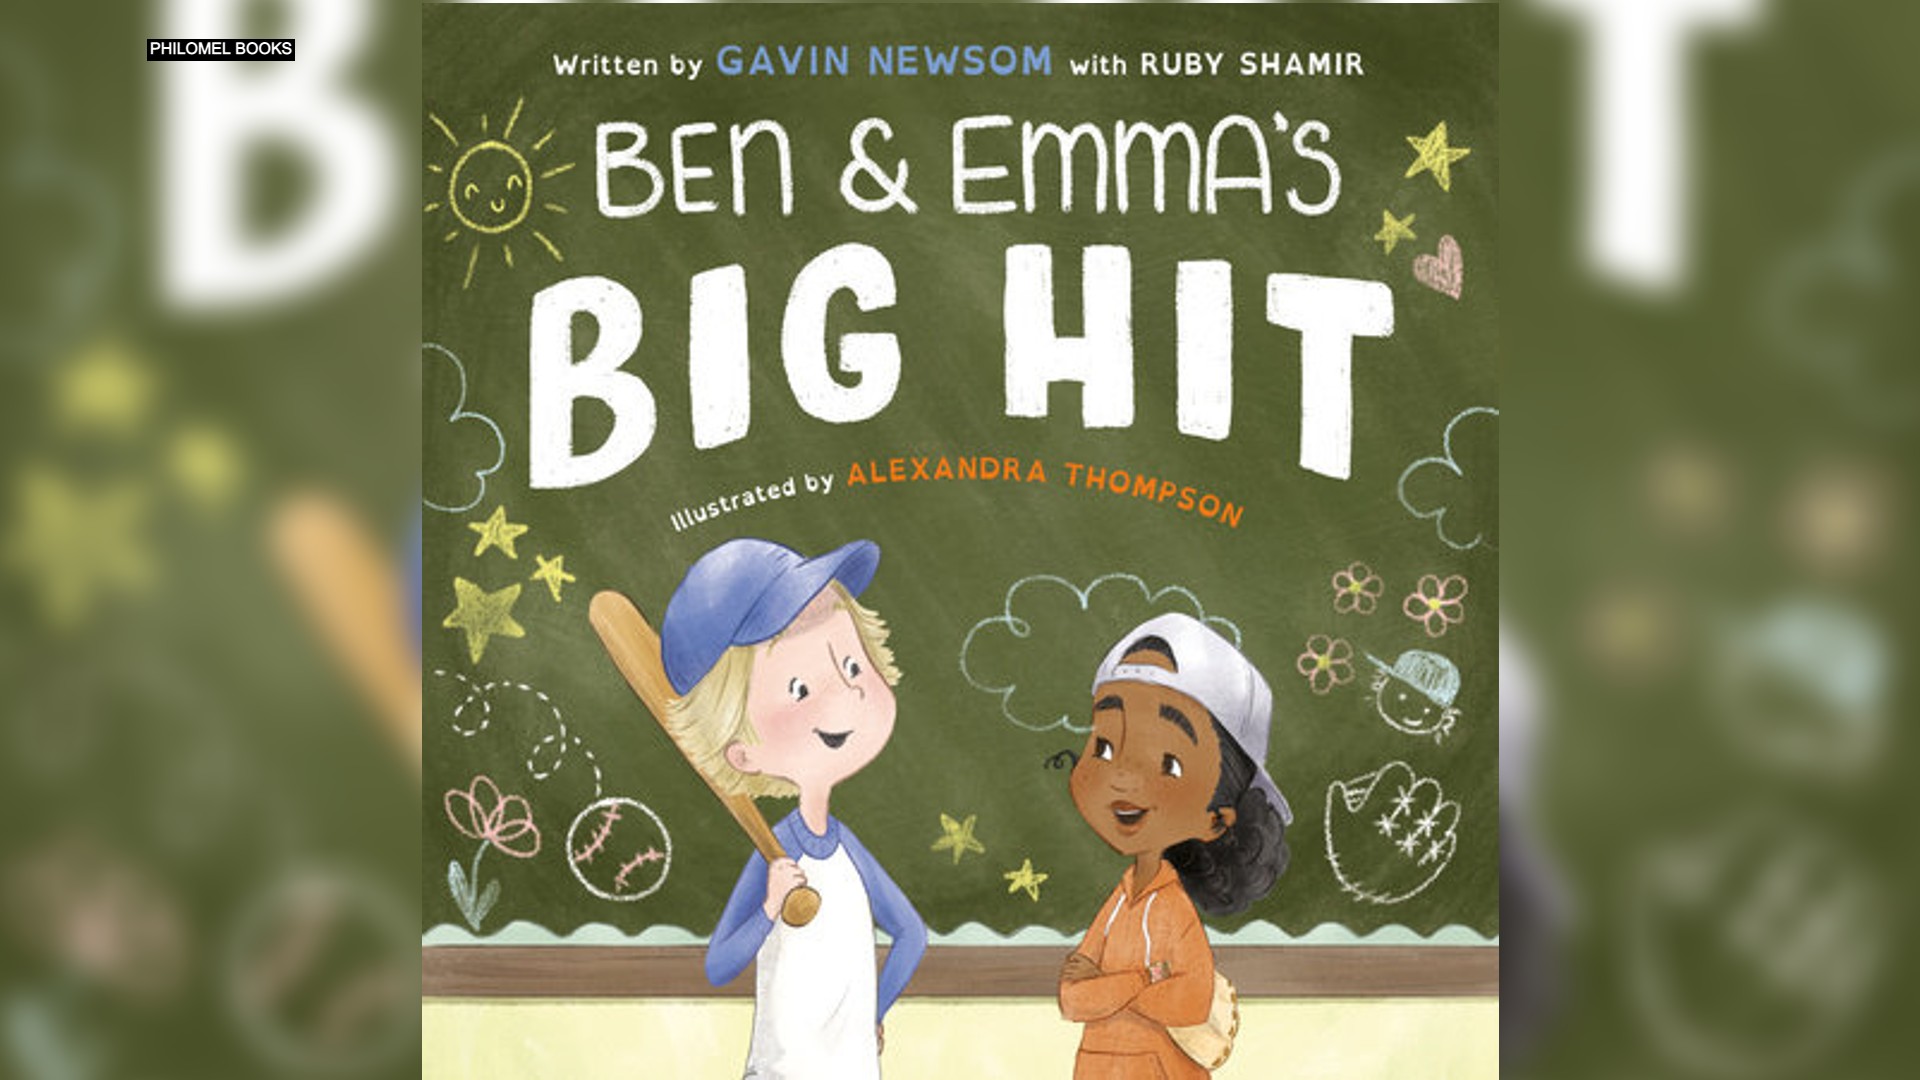 Gavin Newsom Writes Children’s Book About Boy With Dyslexia